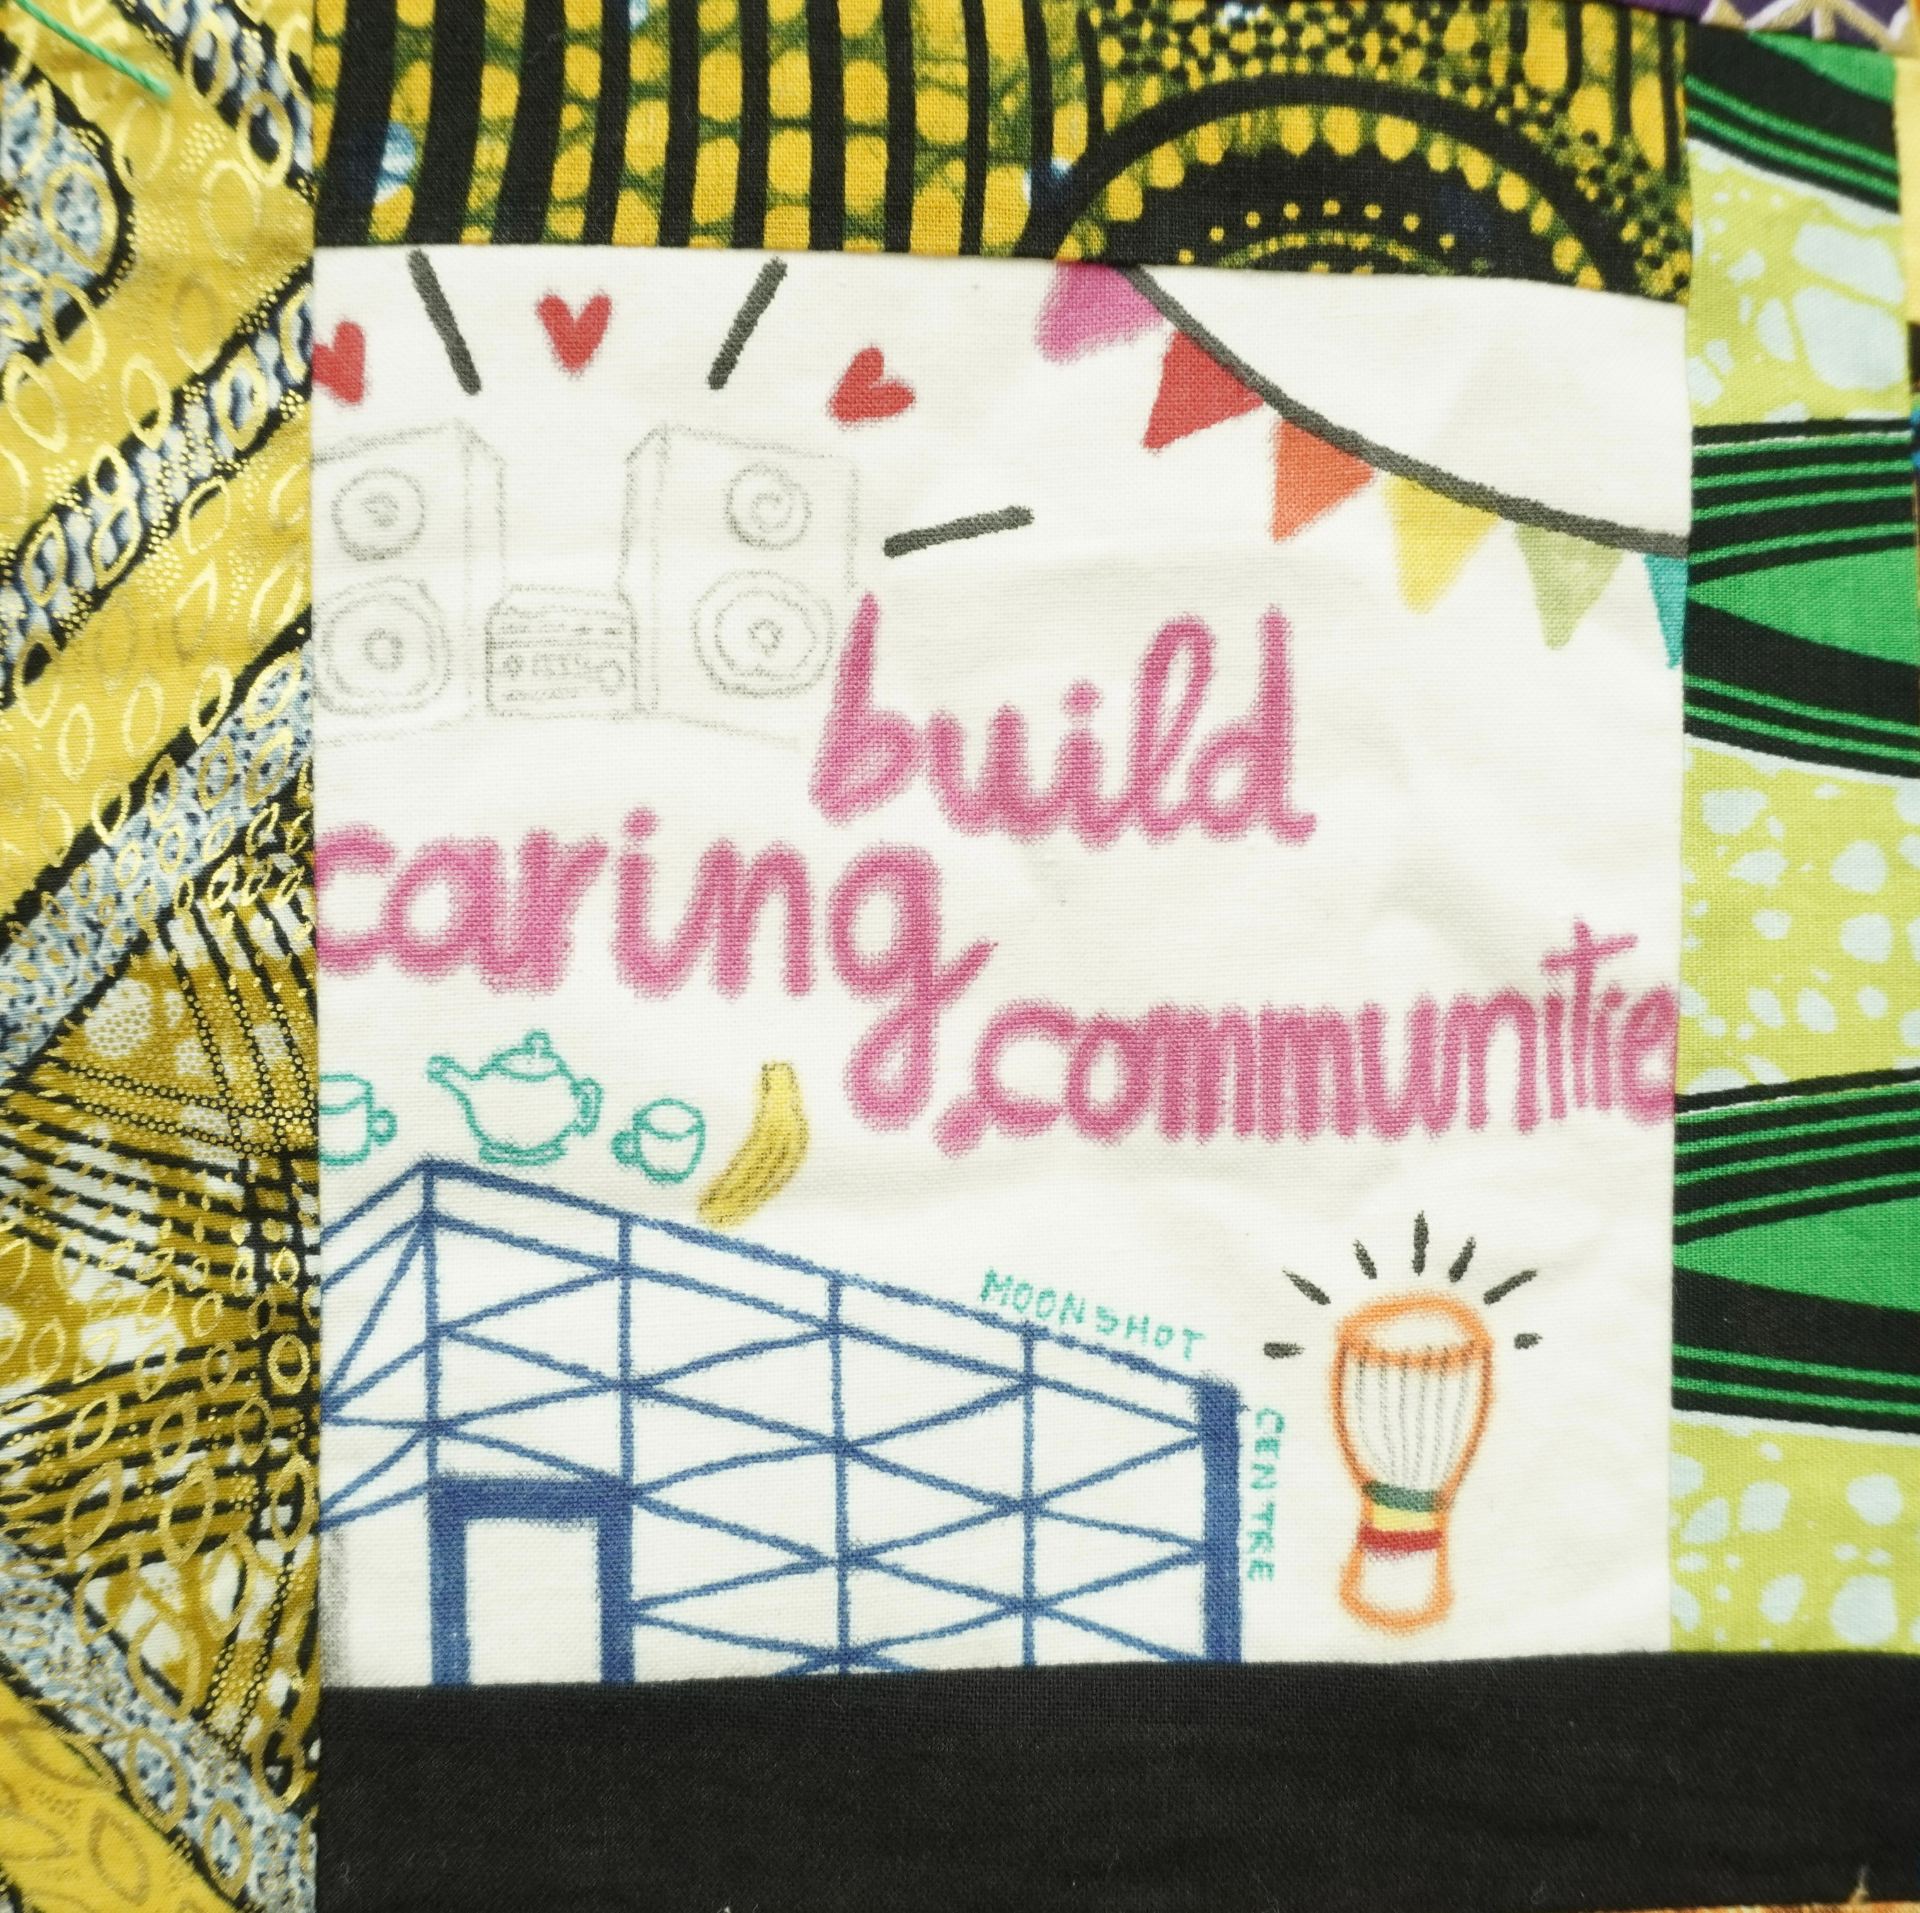 Commemorative quilt. Text reads, 'Build caring communities'